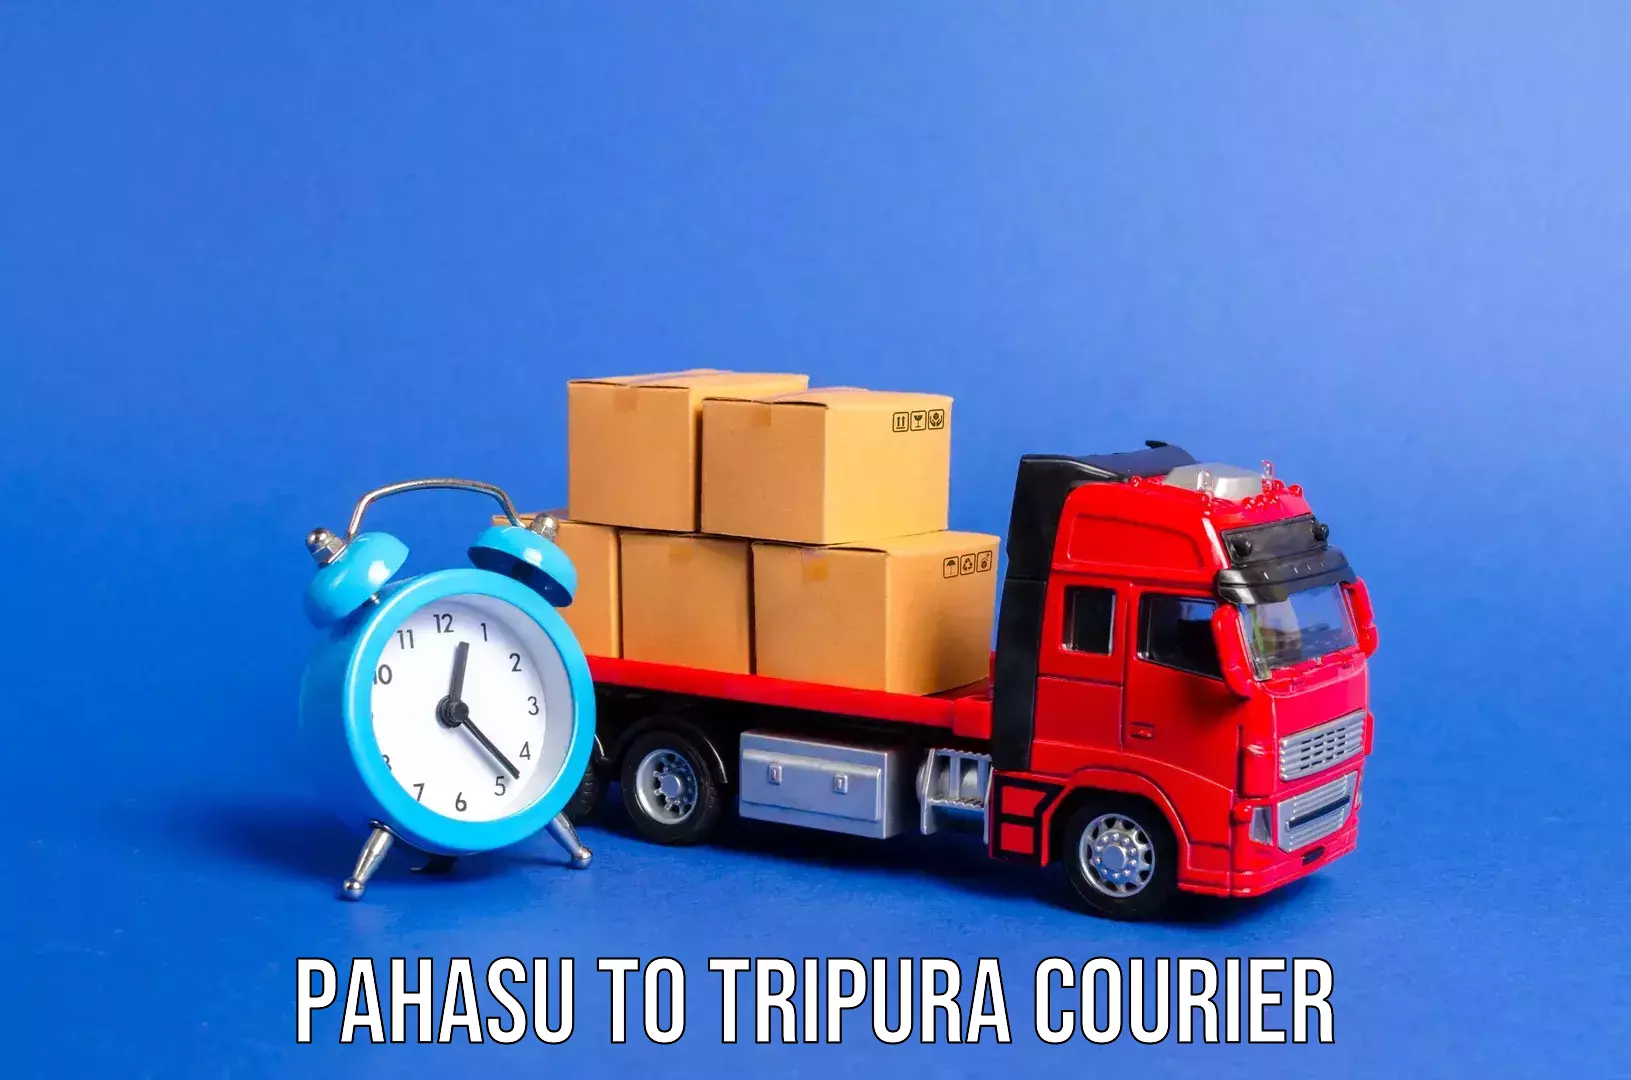 Luggage shipment specialists Pahasu to Tripura